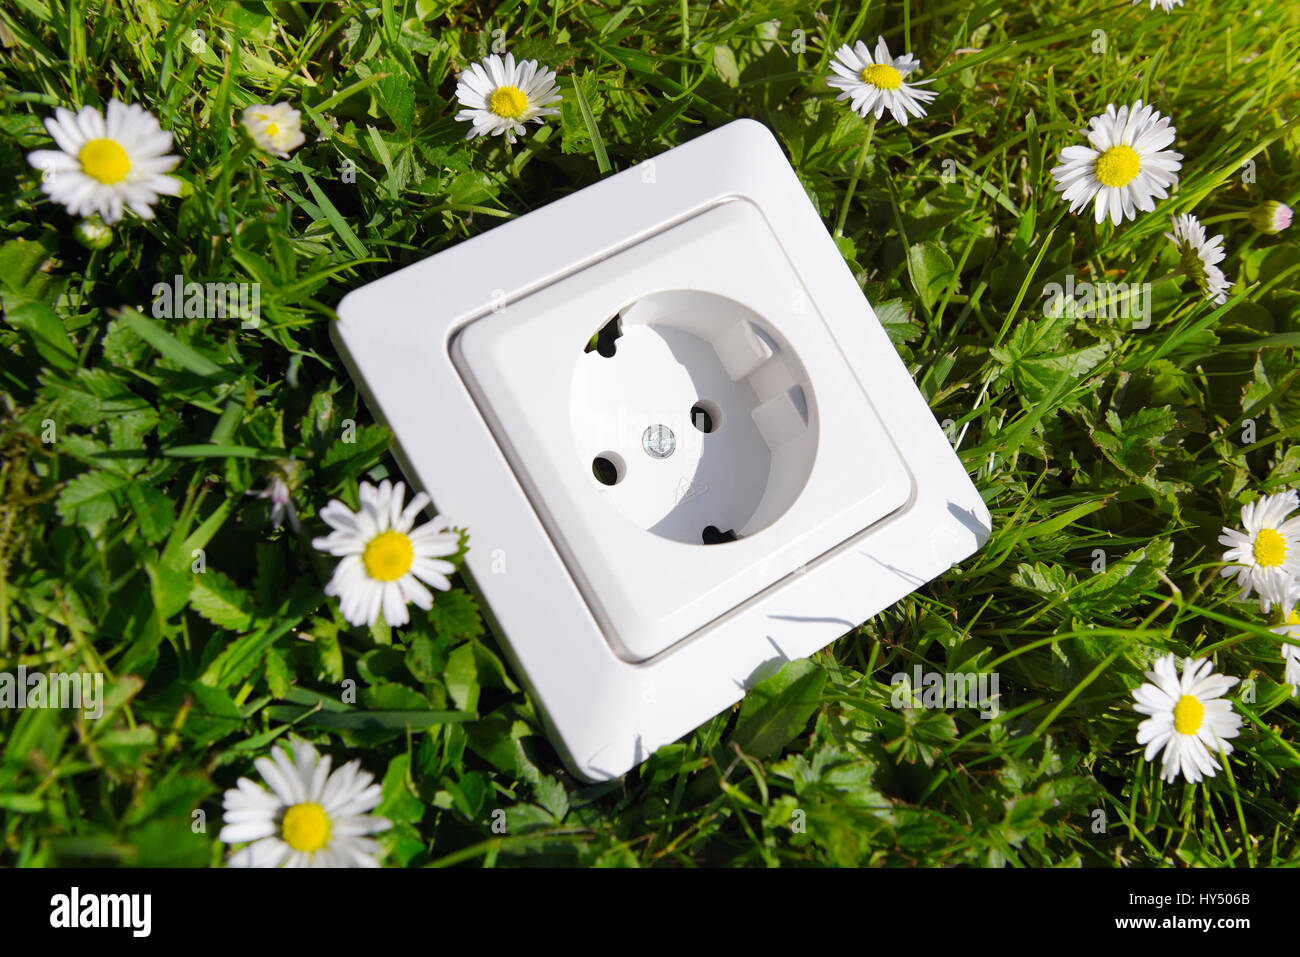 Outlet with daisy on lawn, ecological stream, Steckdose mit Gaensebluemchen auf Rasen, oekostrom Stock Photo